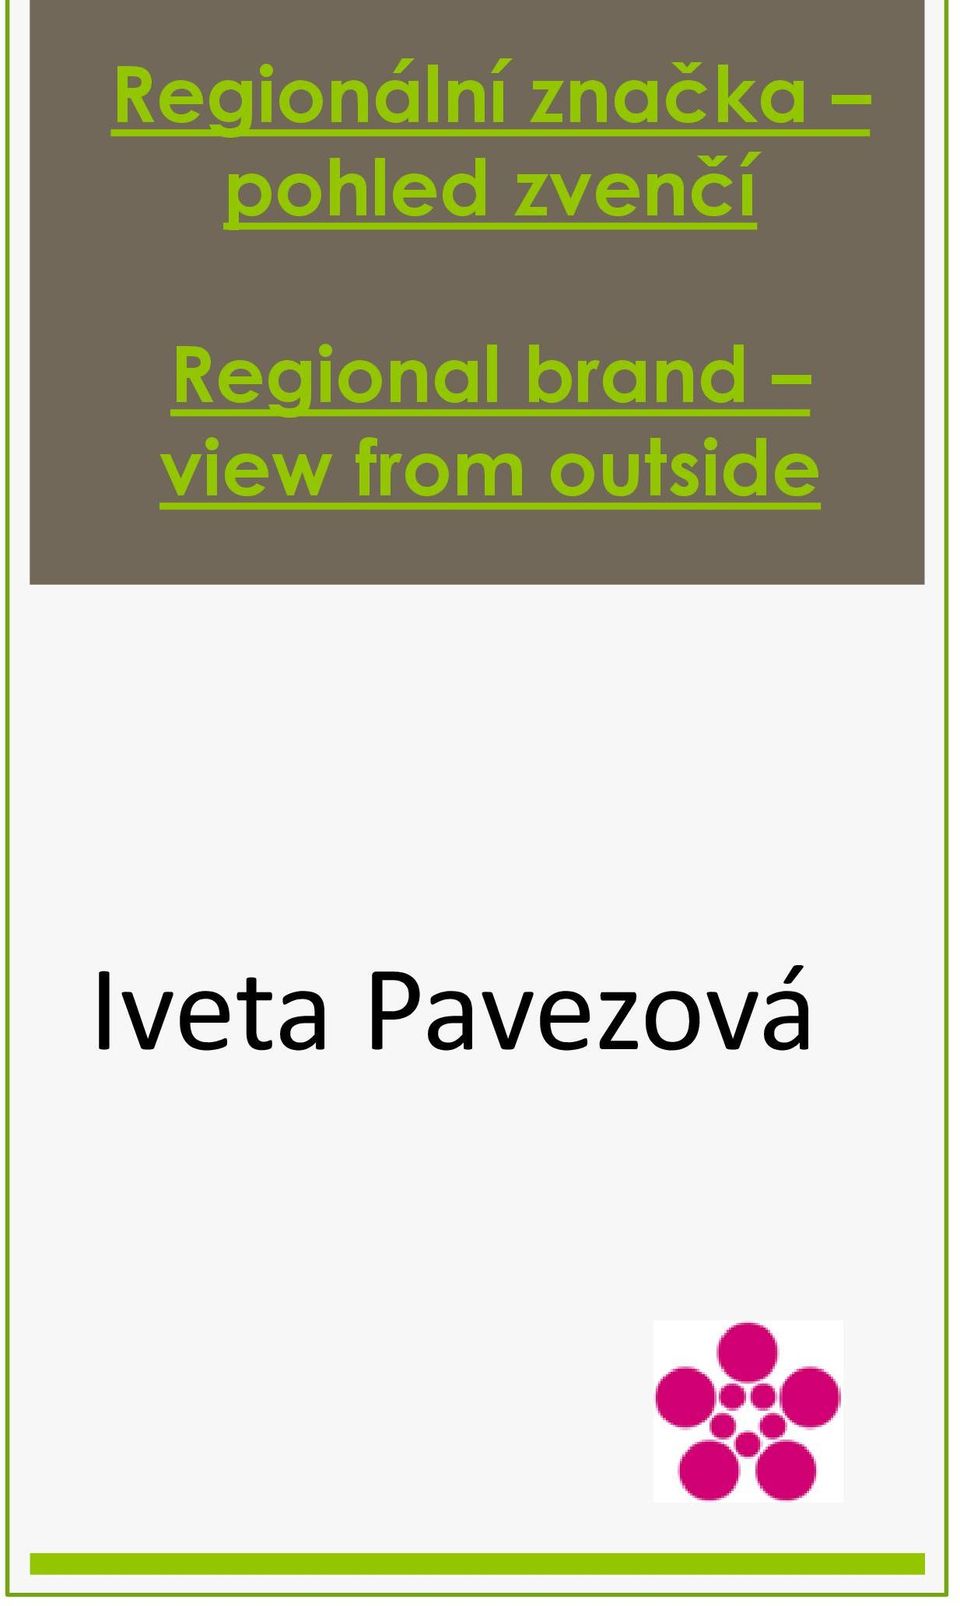 Regional brand view